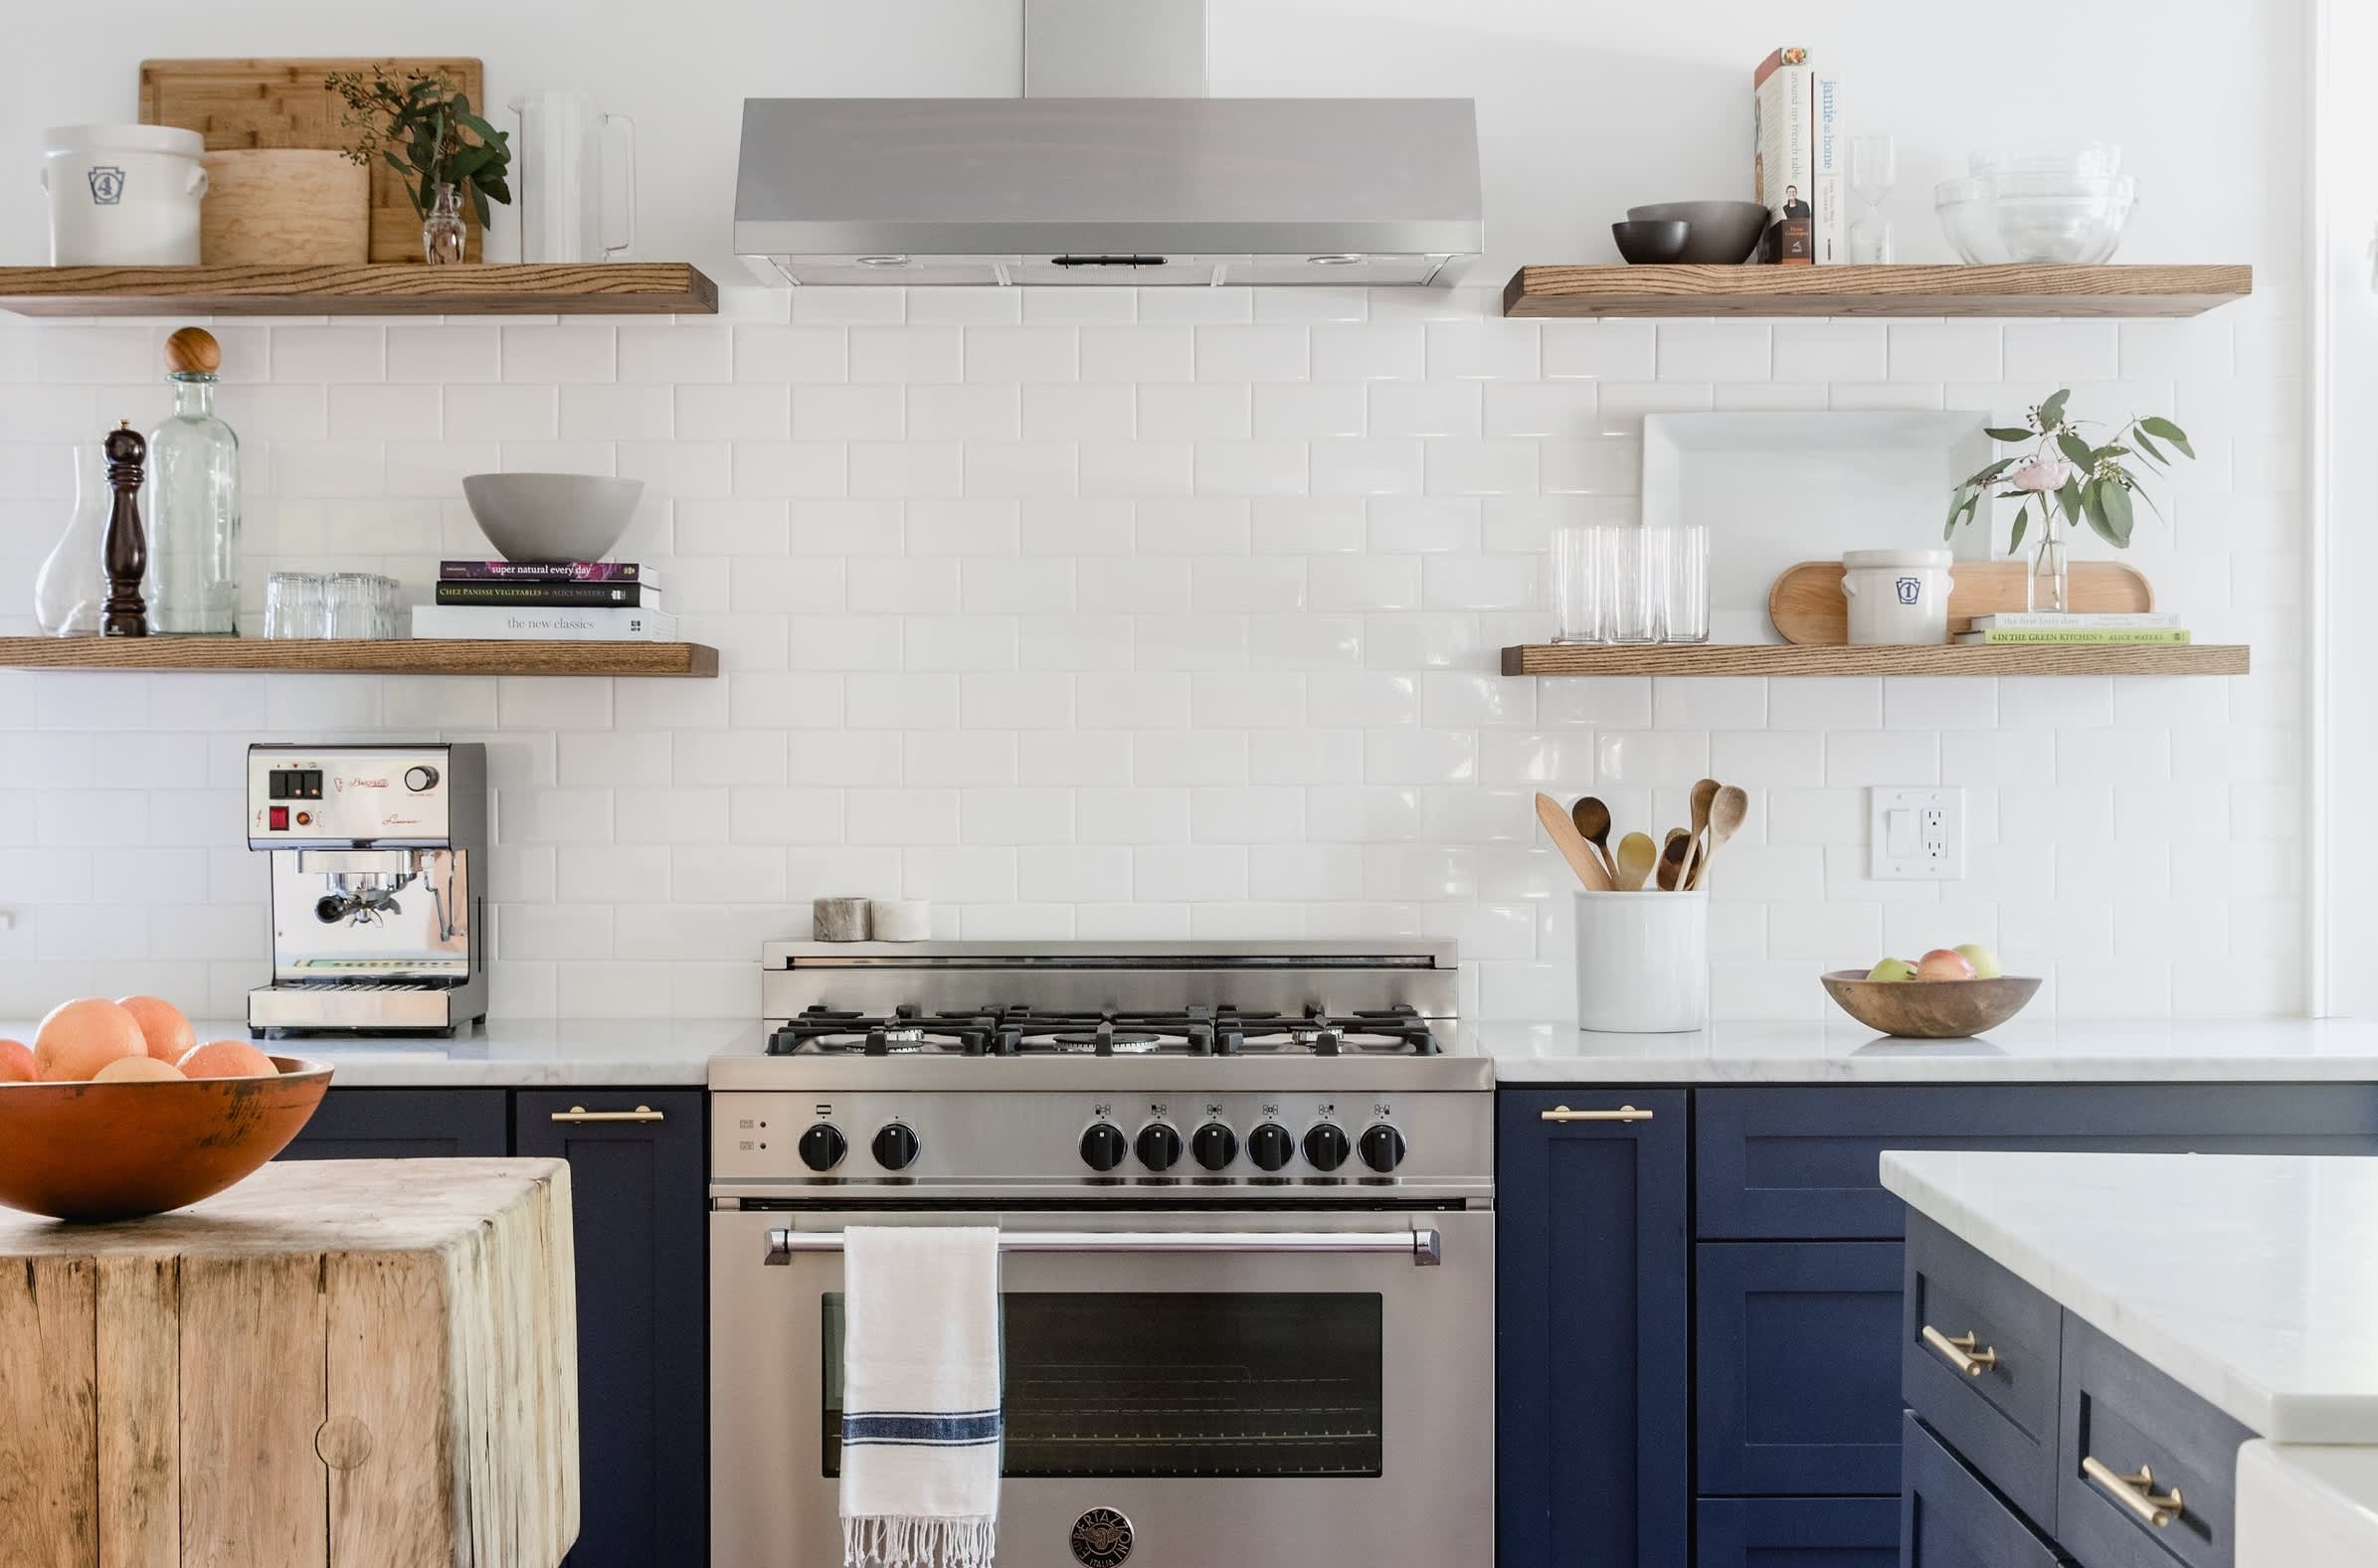 Kitchen Backsplash - Tile Ideas, Pictures, Designs ...